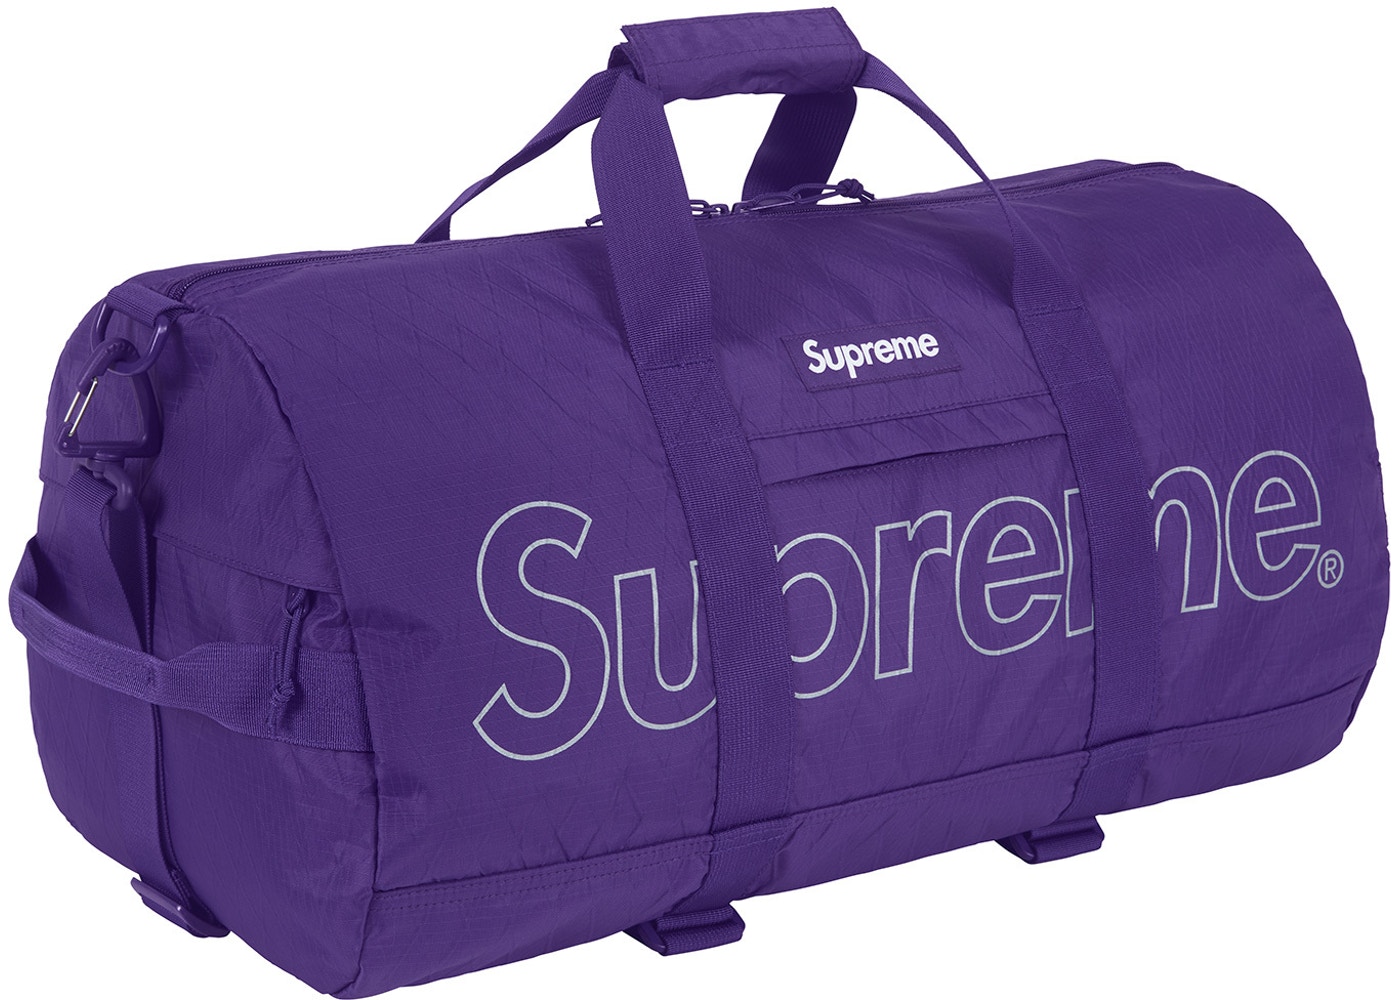 Classroom Siege bound Supreme Duffle Bag (FW18) Purple - StockX News